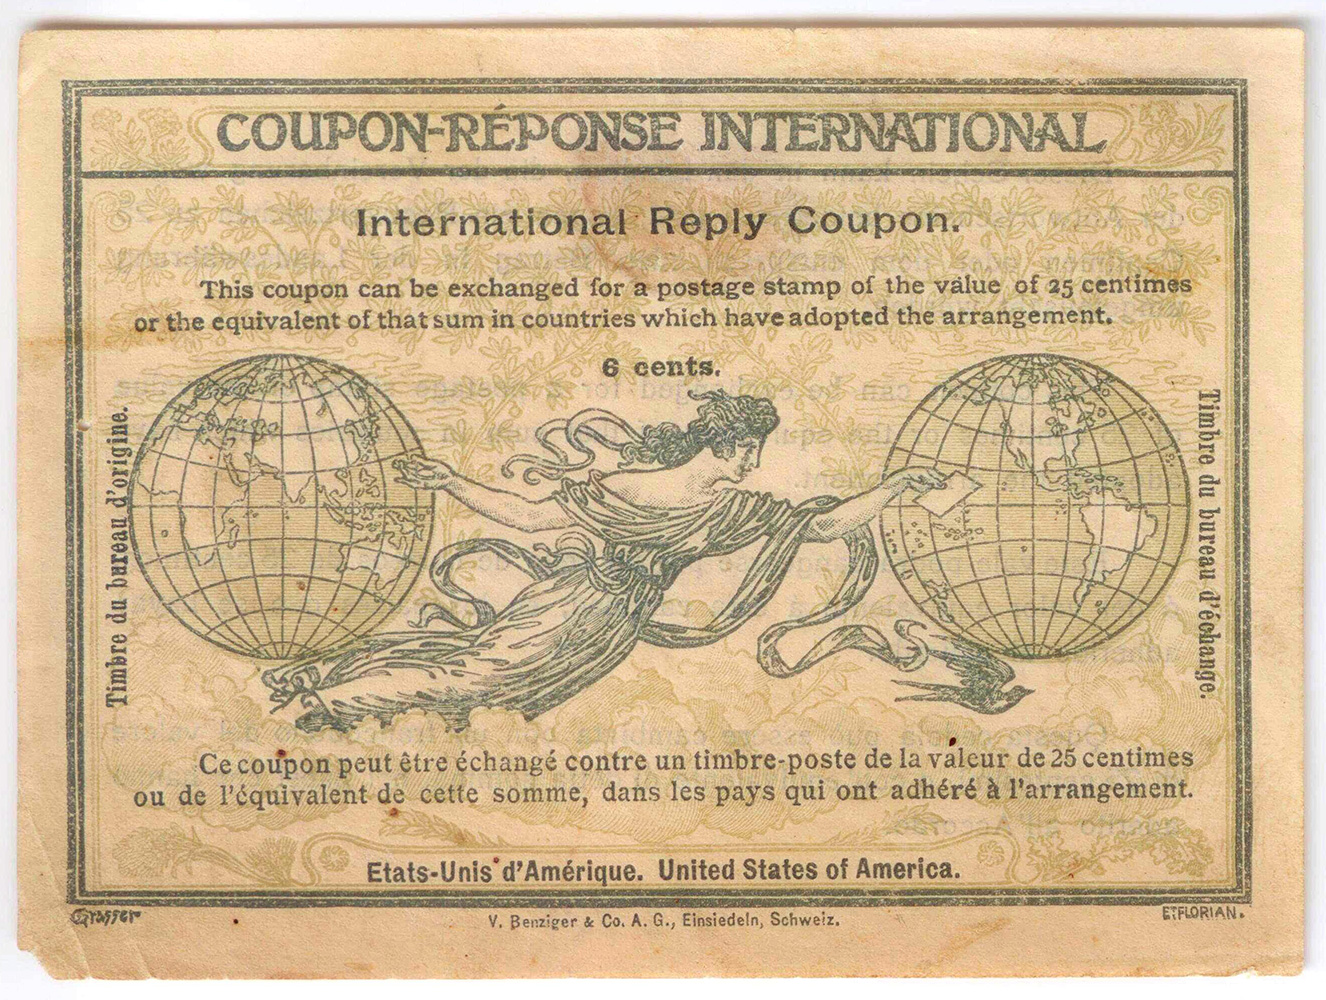 International Reply Coupon